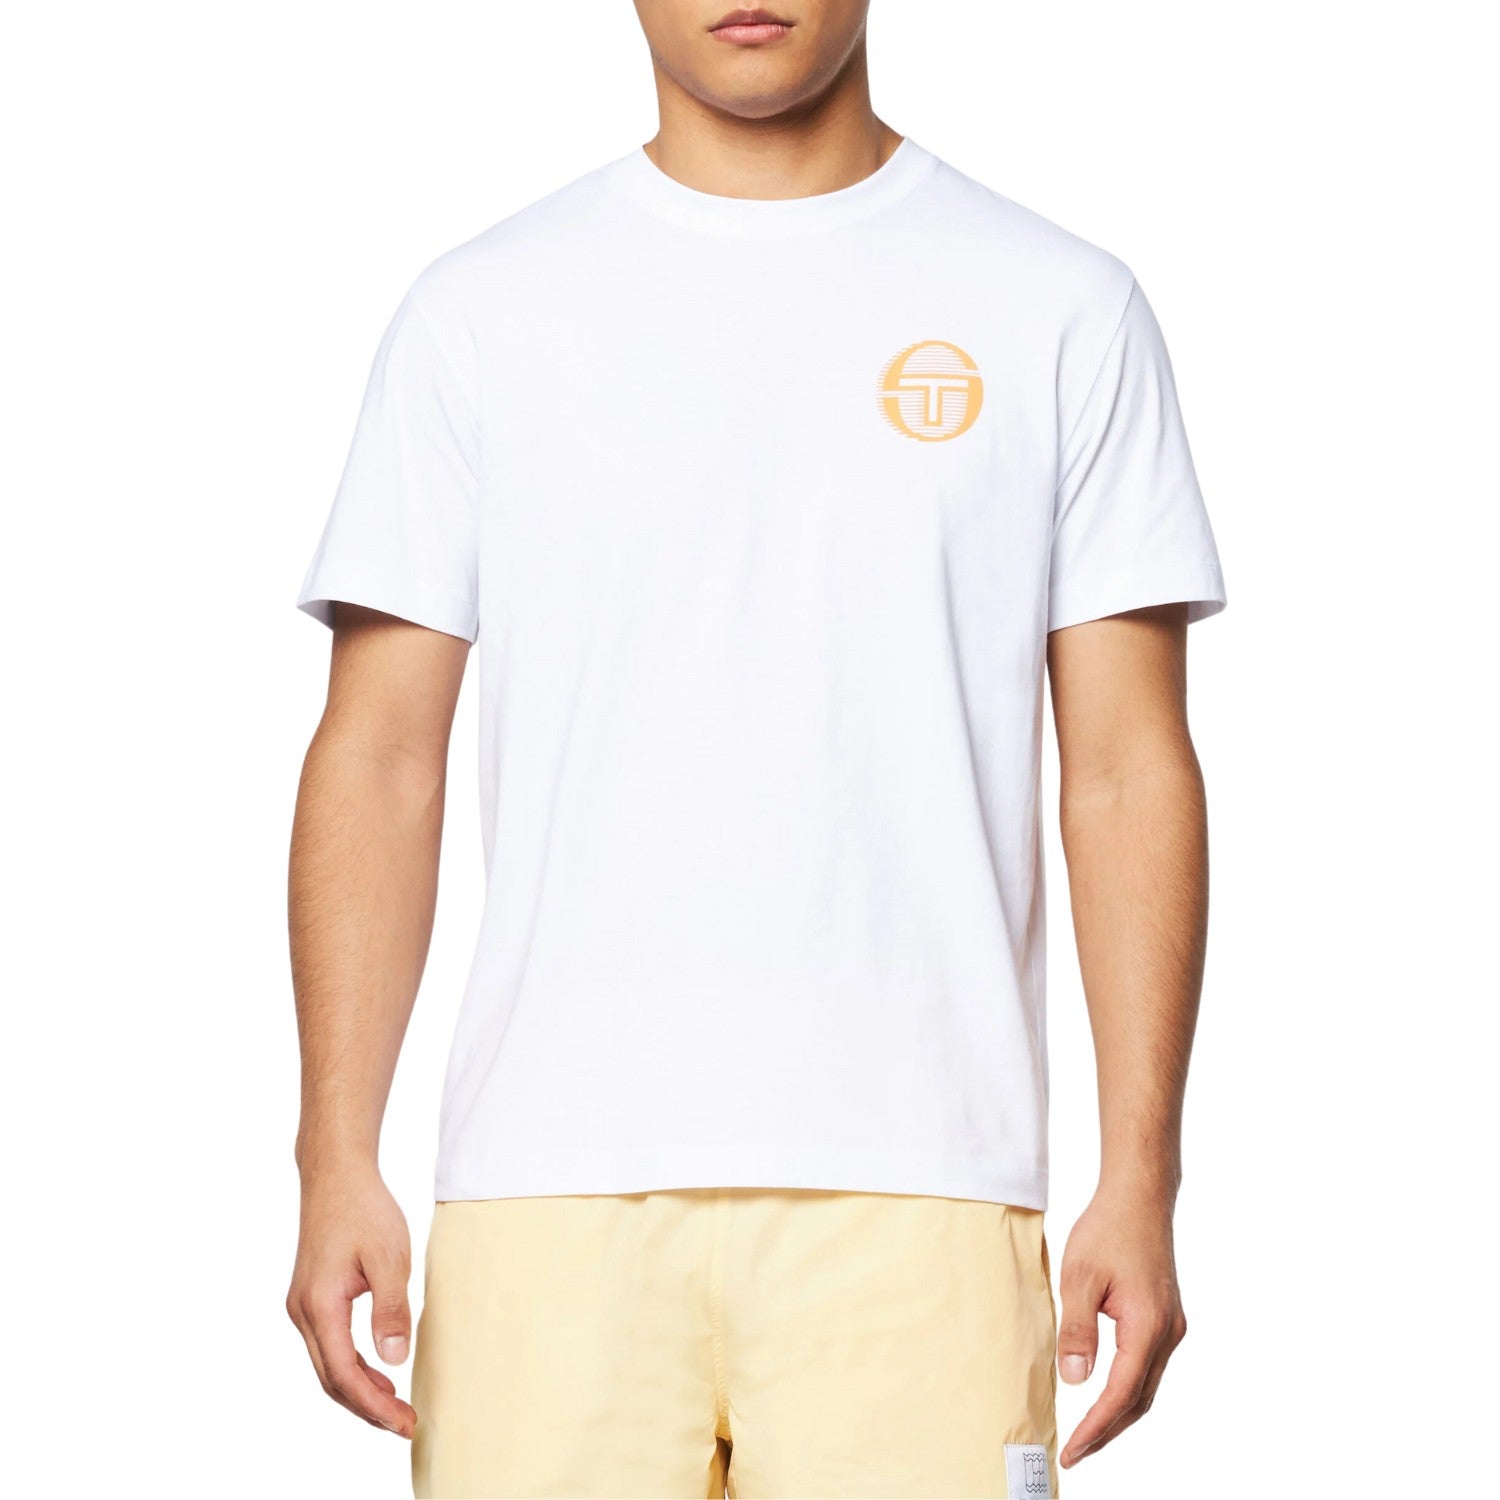 Sergio Tacchini Tenda T-shirt Mens Style : Sts24m50819